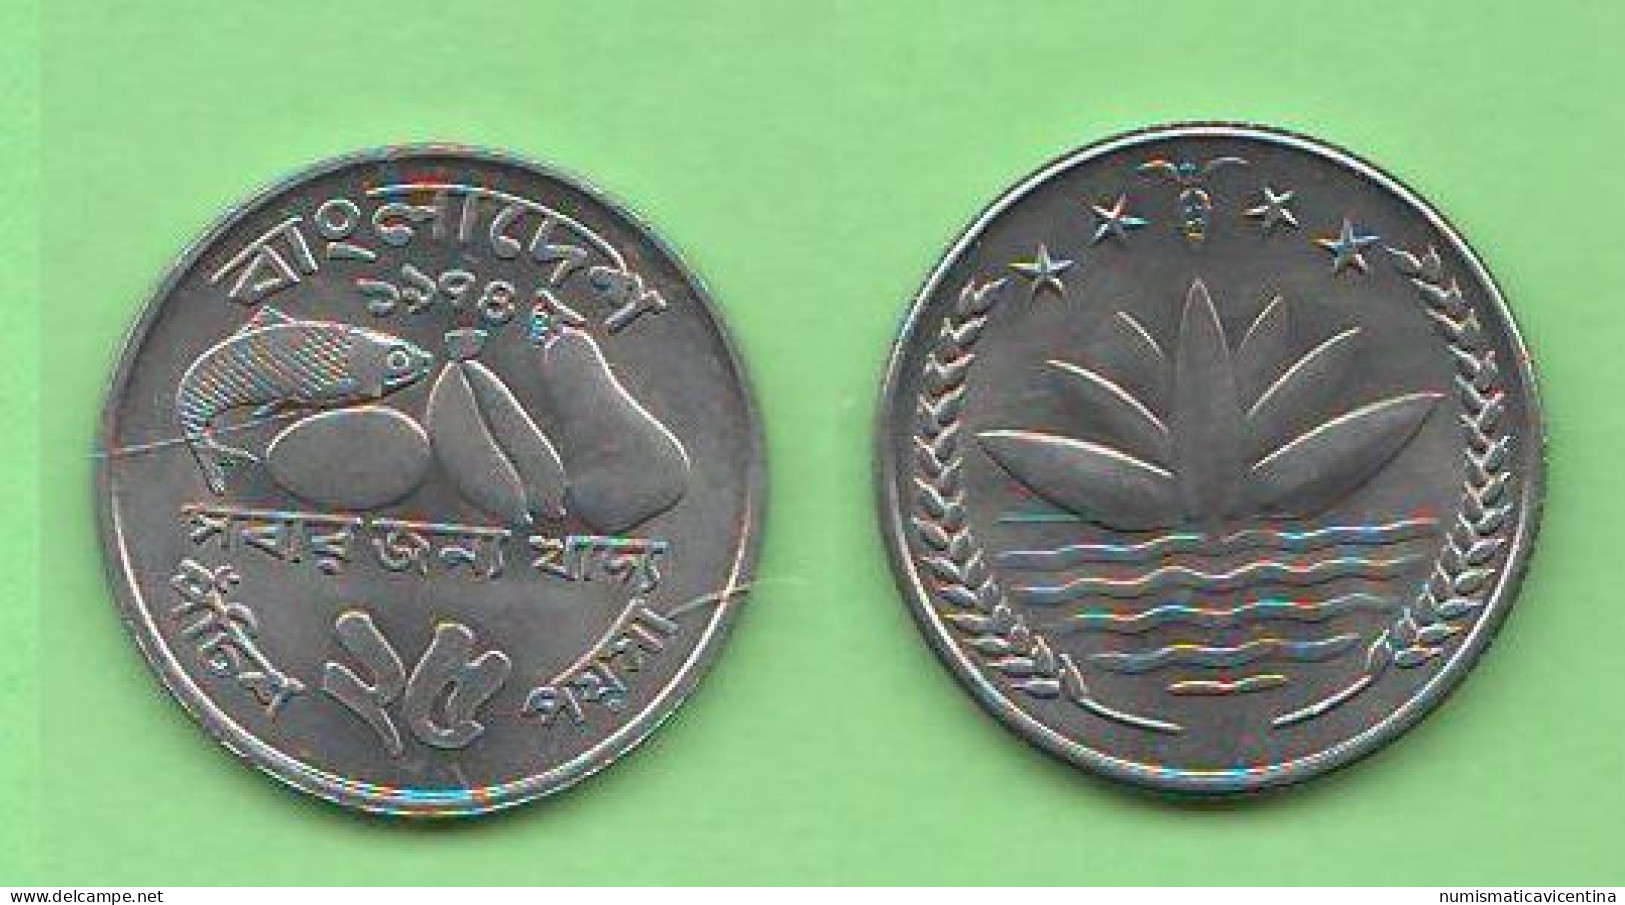 Bangladesh 25 + 50 Poisha FAO Steel Asian Coin - Bangladesh